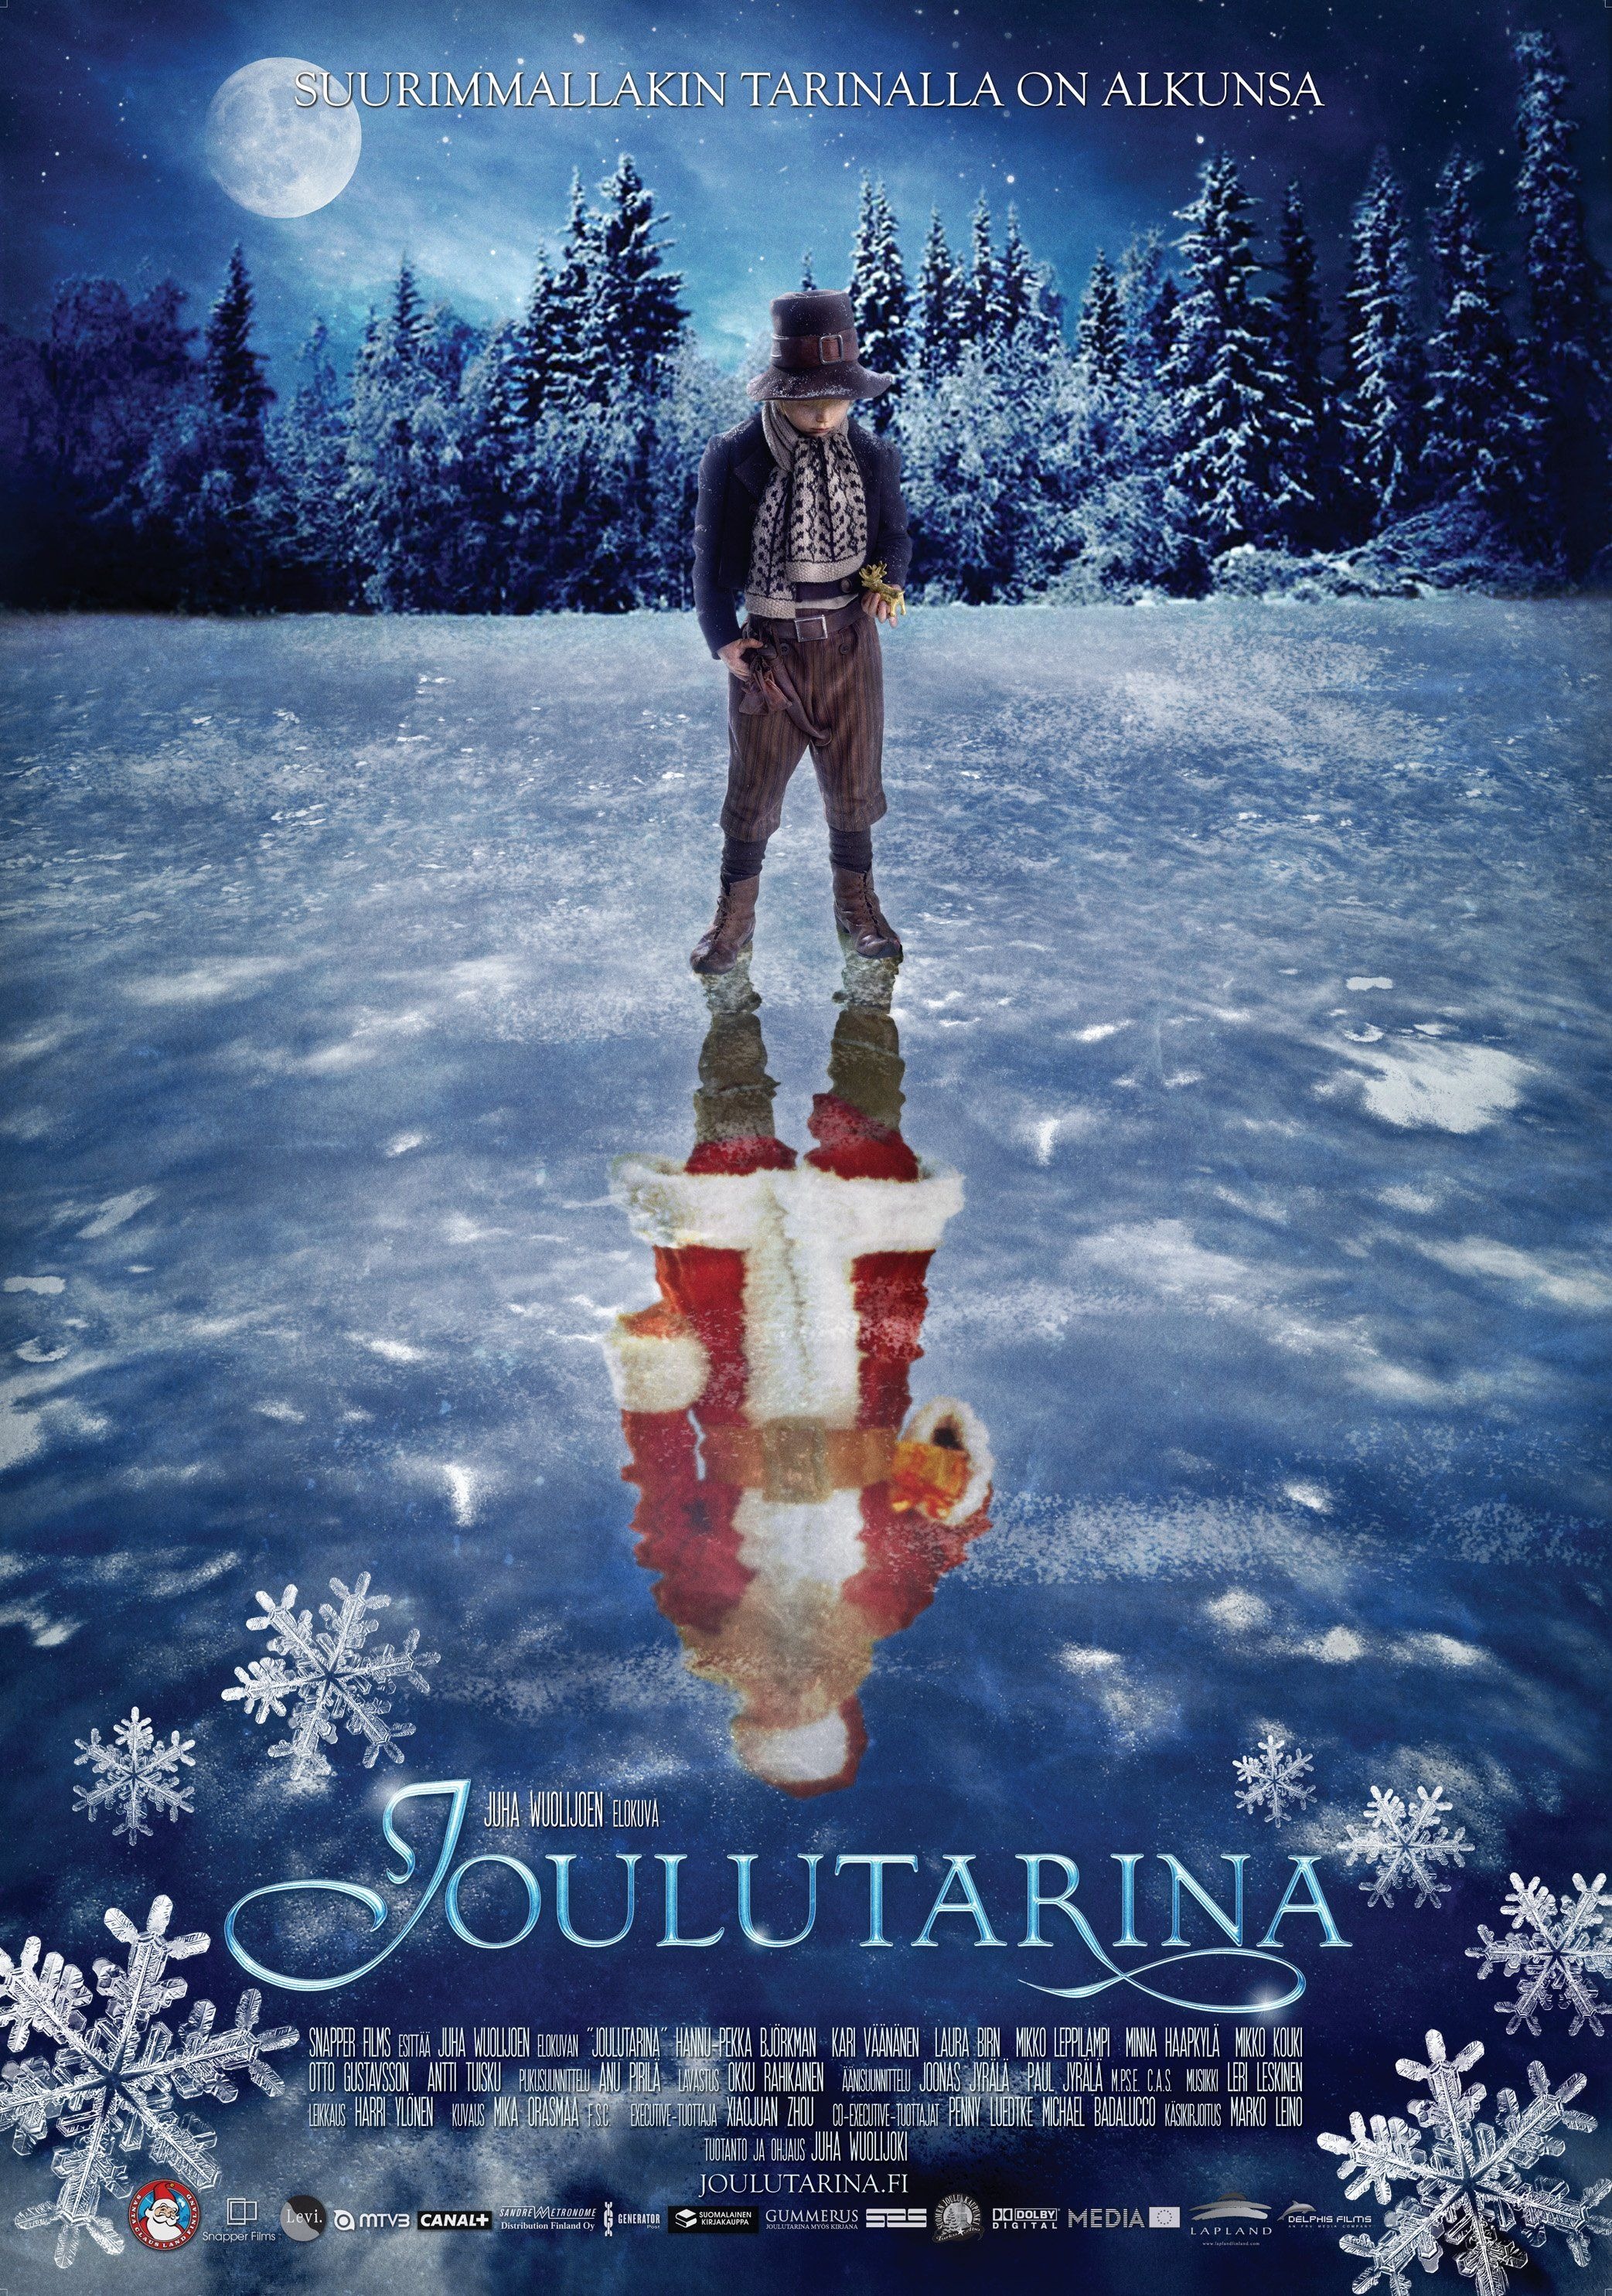 Mega Sized Movie Poster Image for Joulutarina 